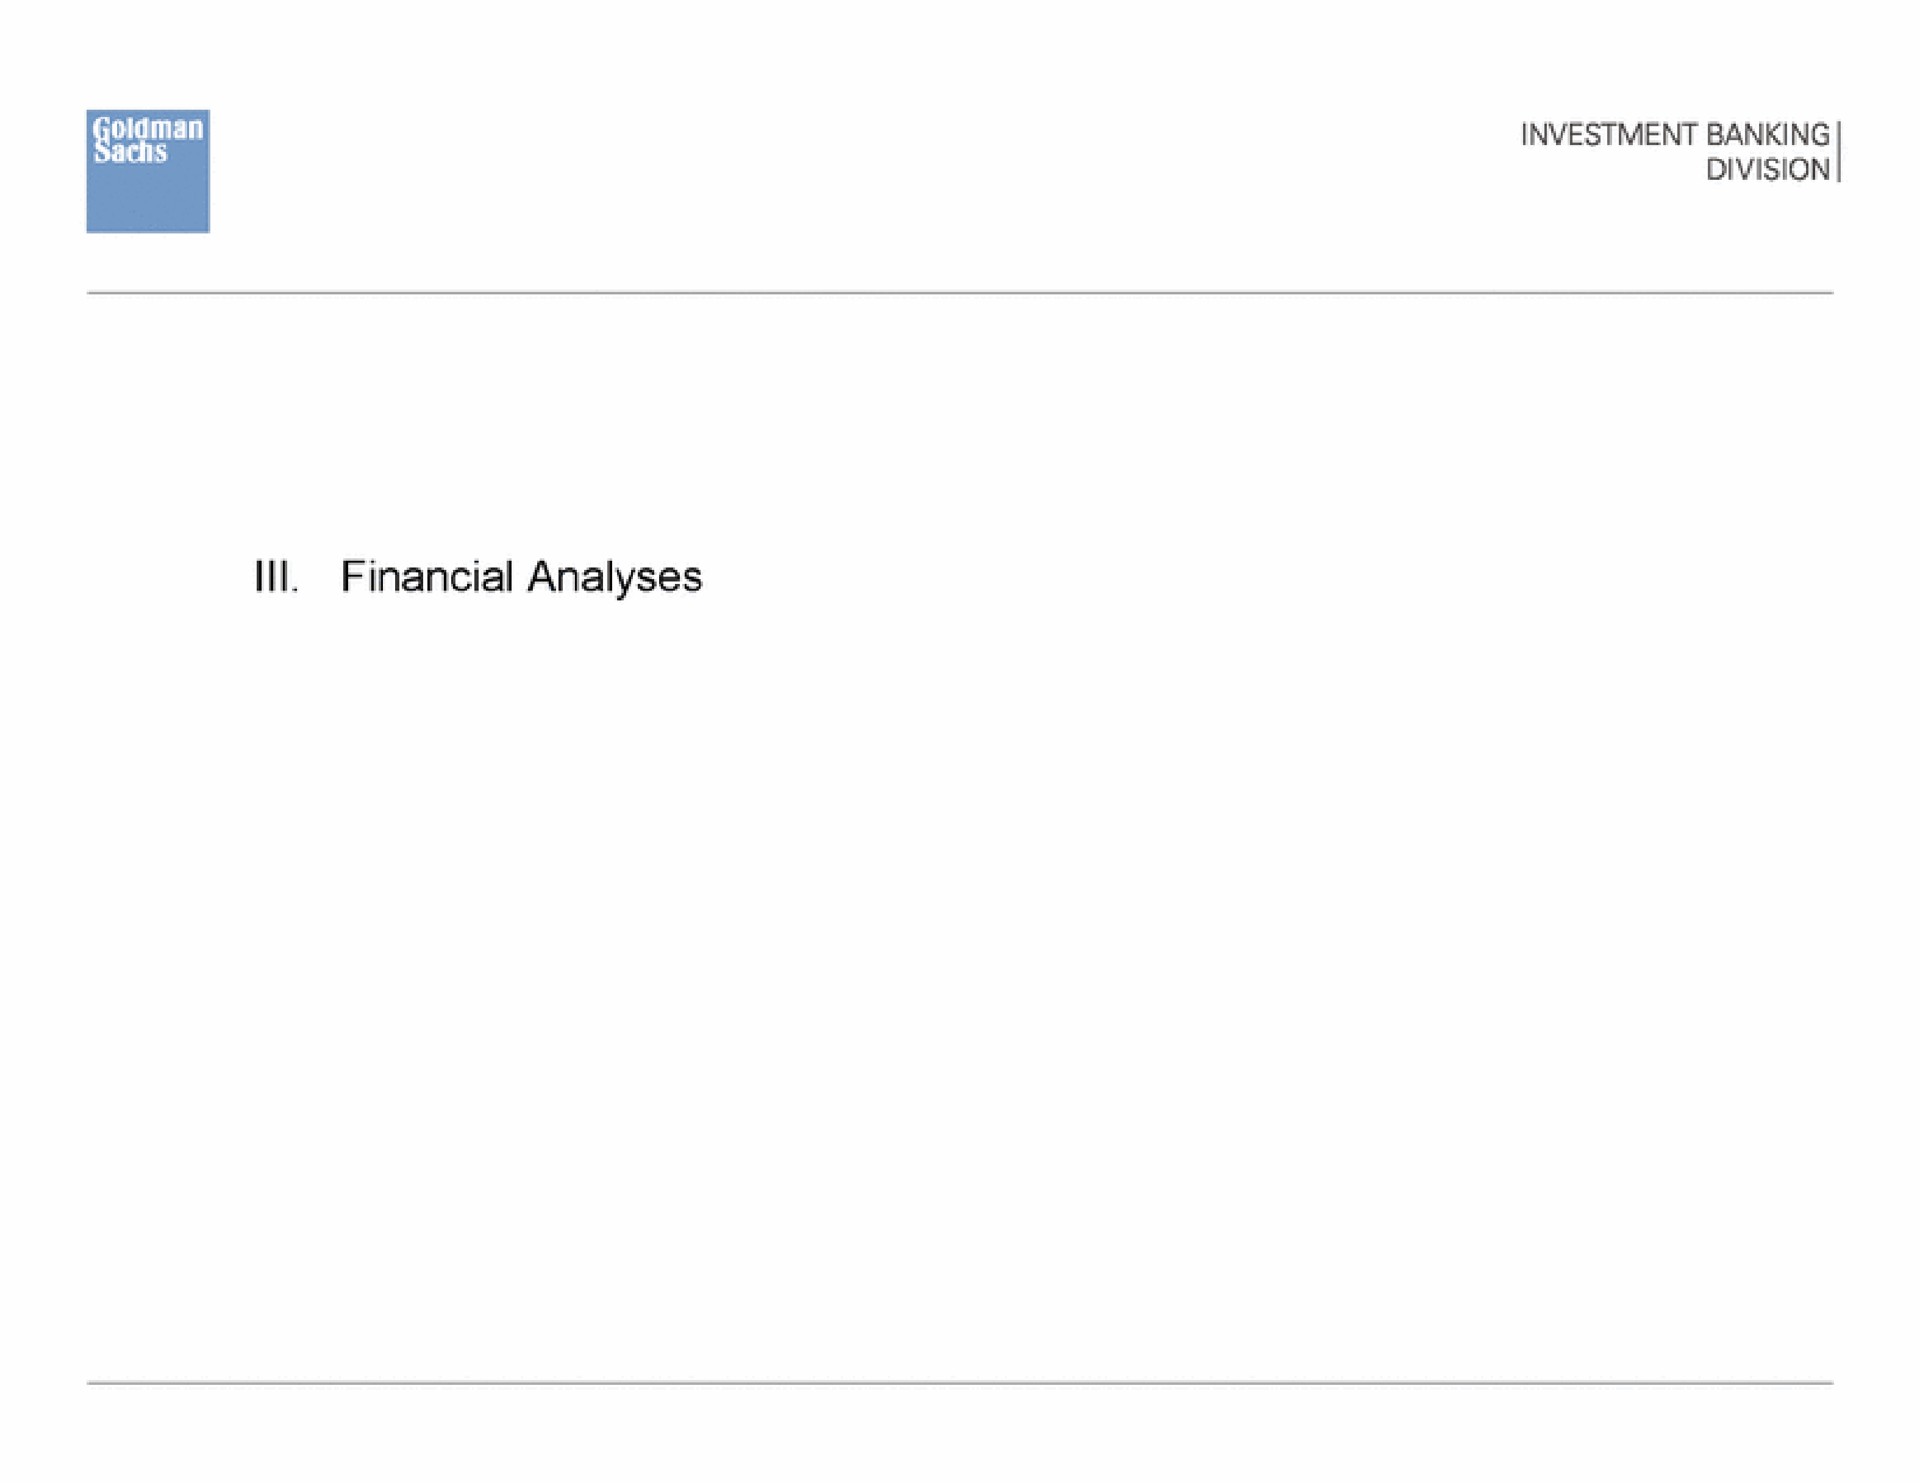 ill financial analyses | Goldman Sachs